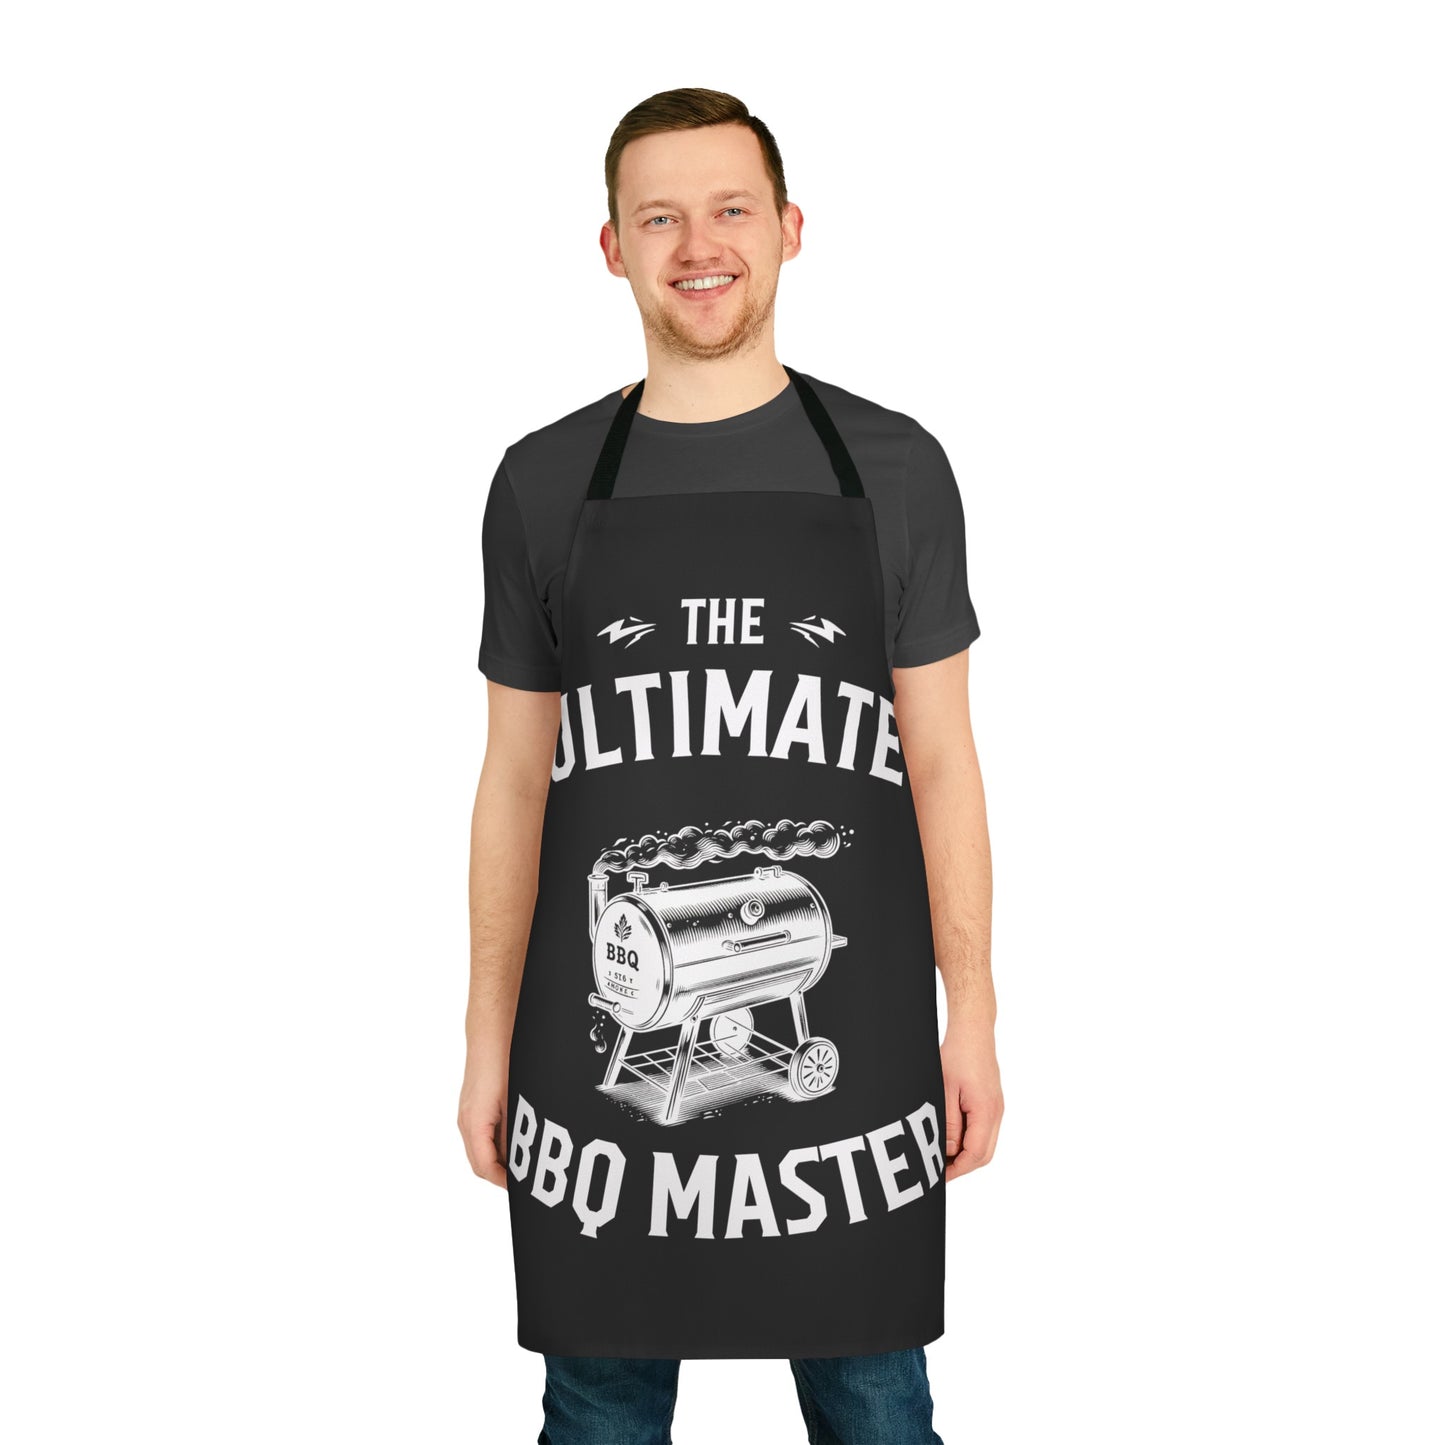 Ultimate BBQ Master apron